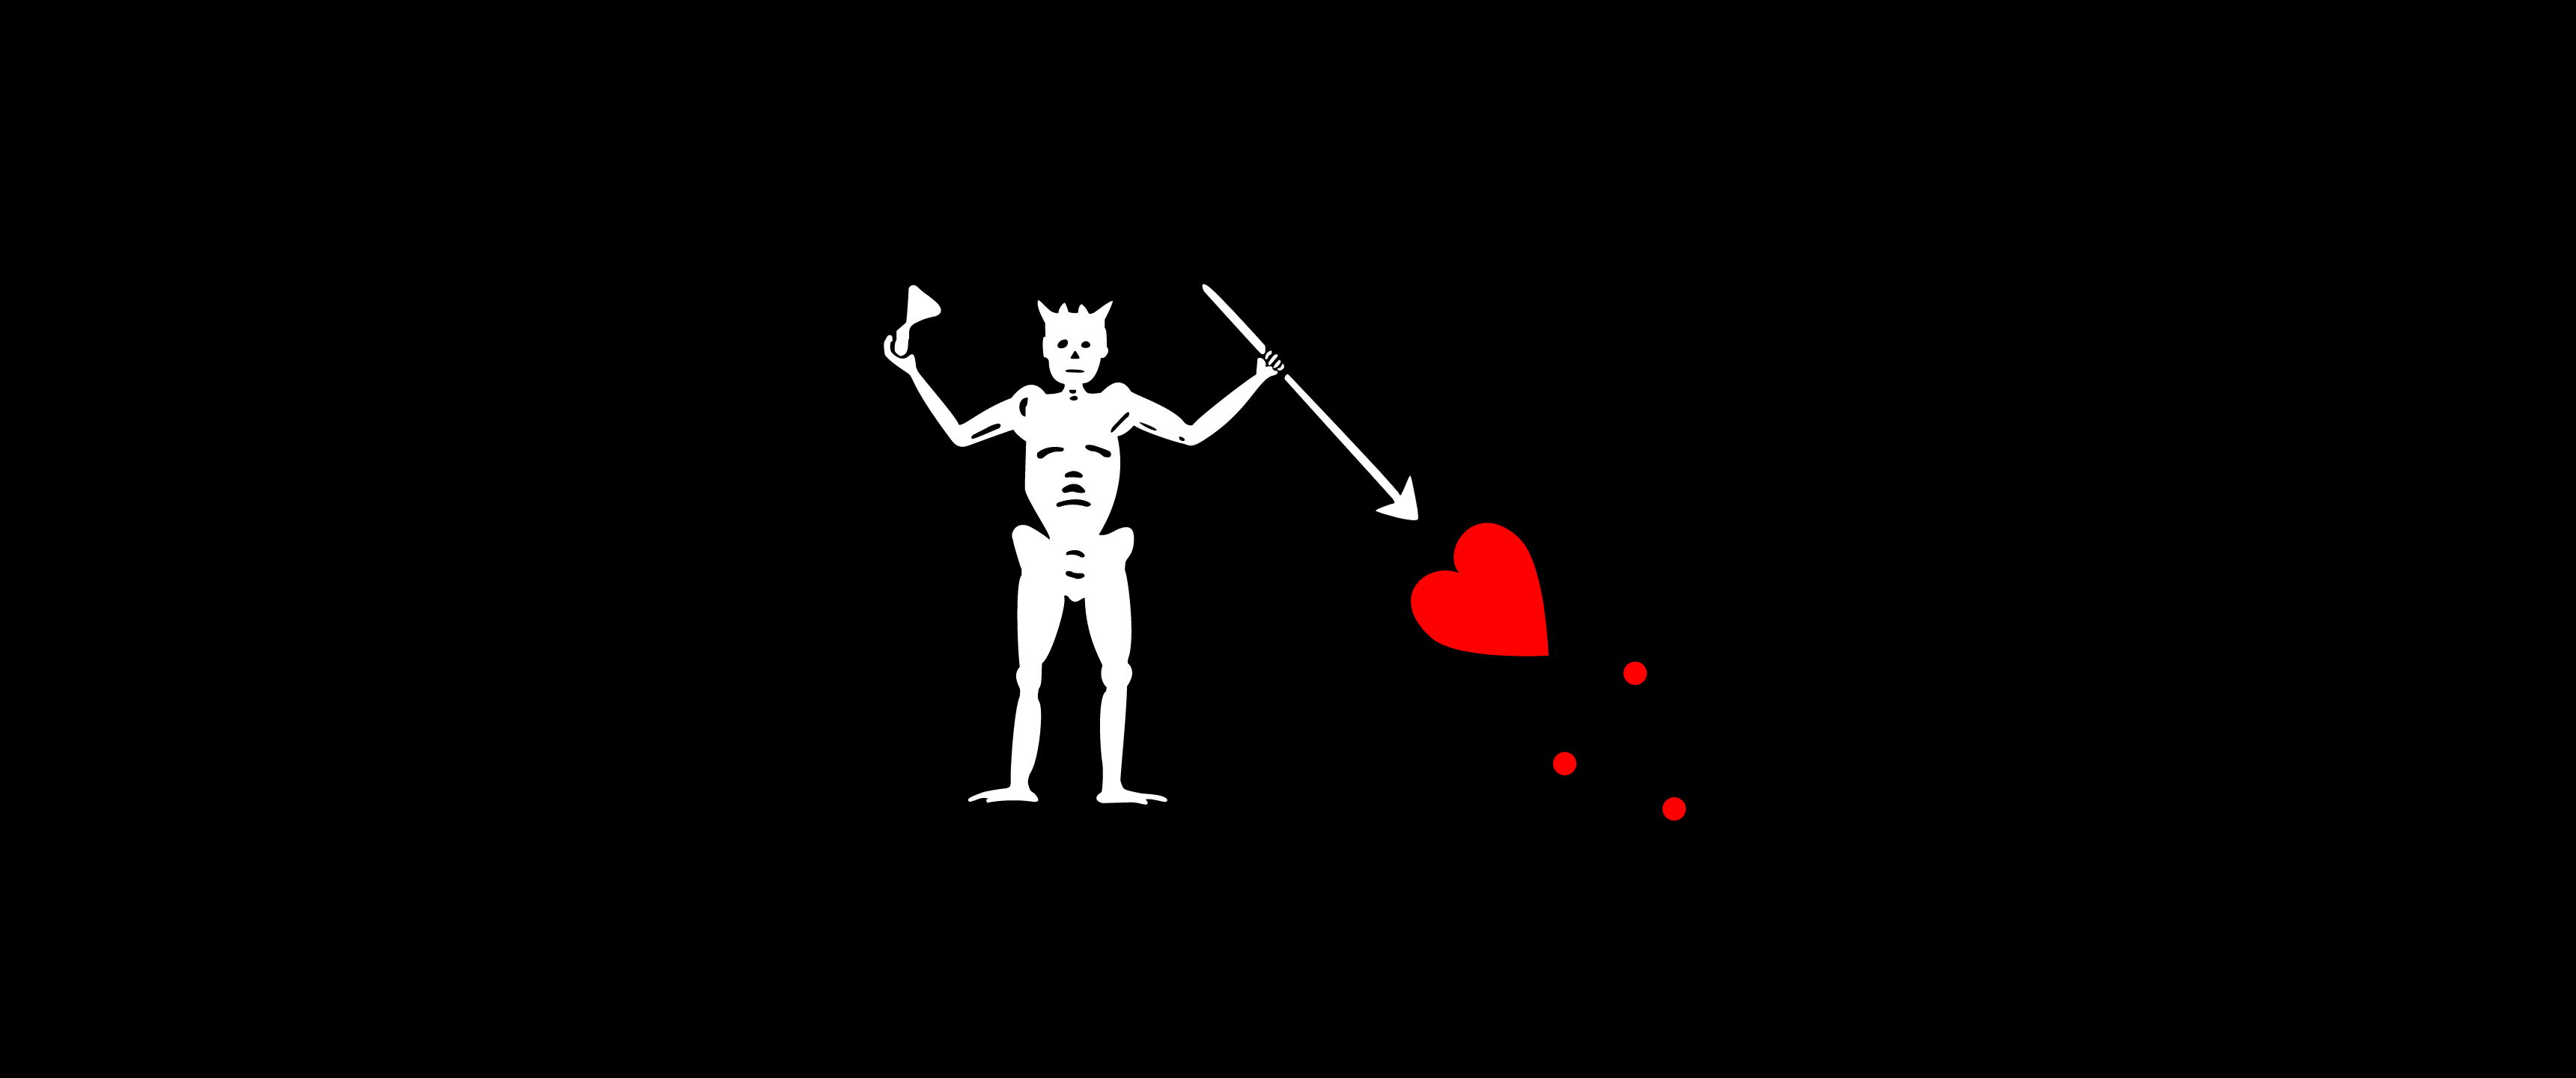 Flag Simple Background Black Background Heart Skeleton Weapon Minimalism 3440x1440